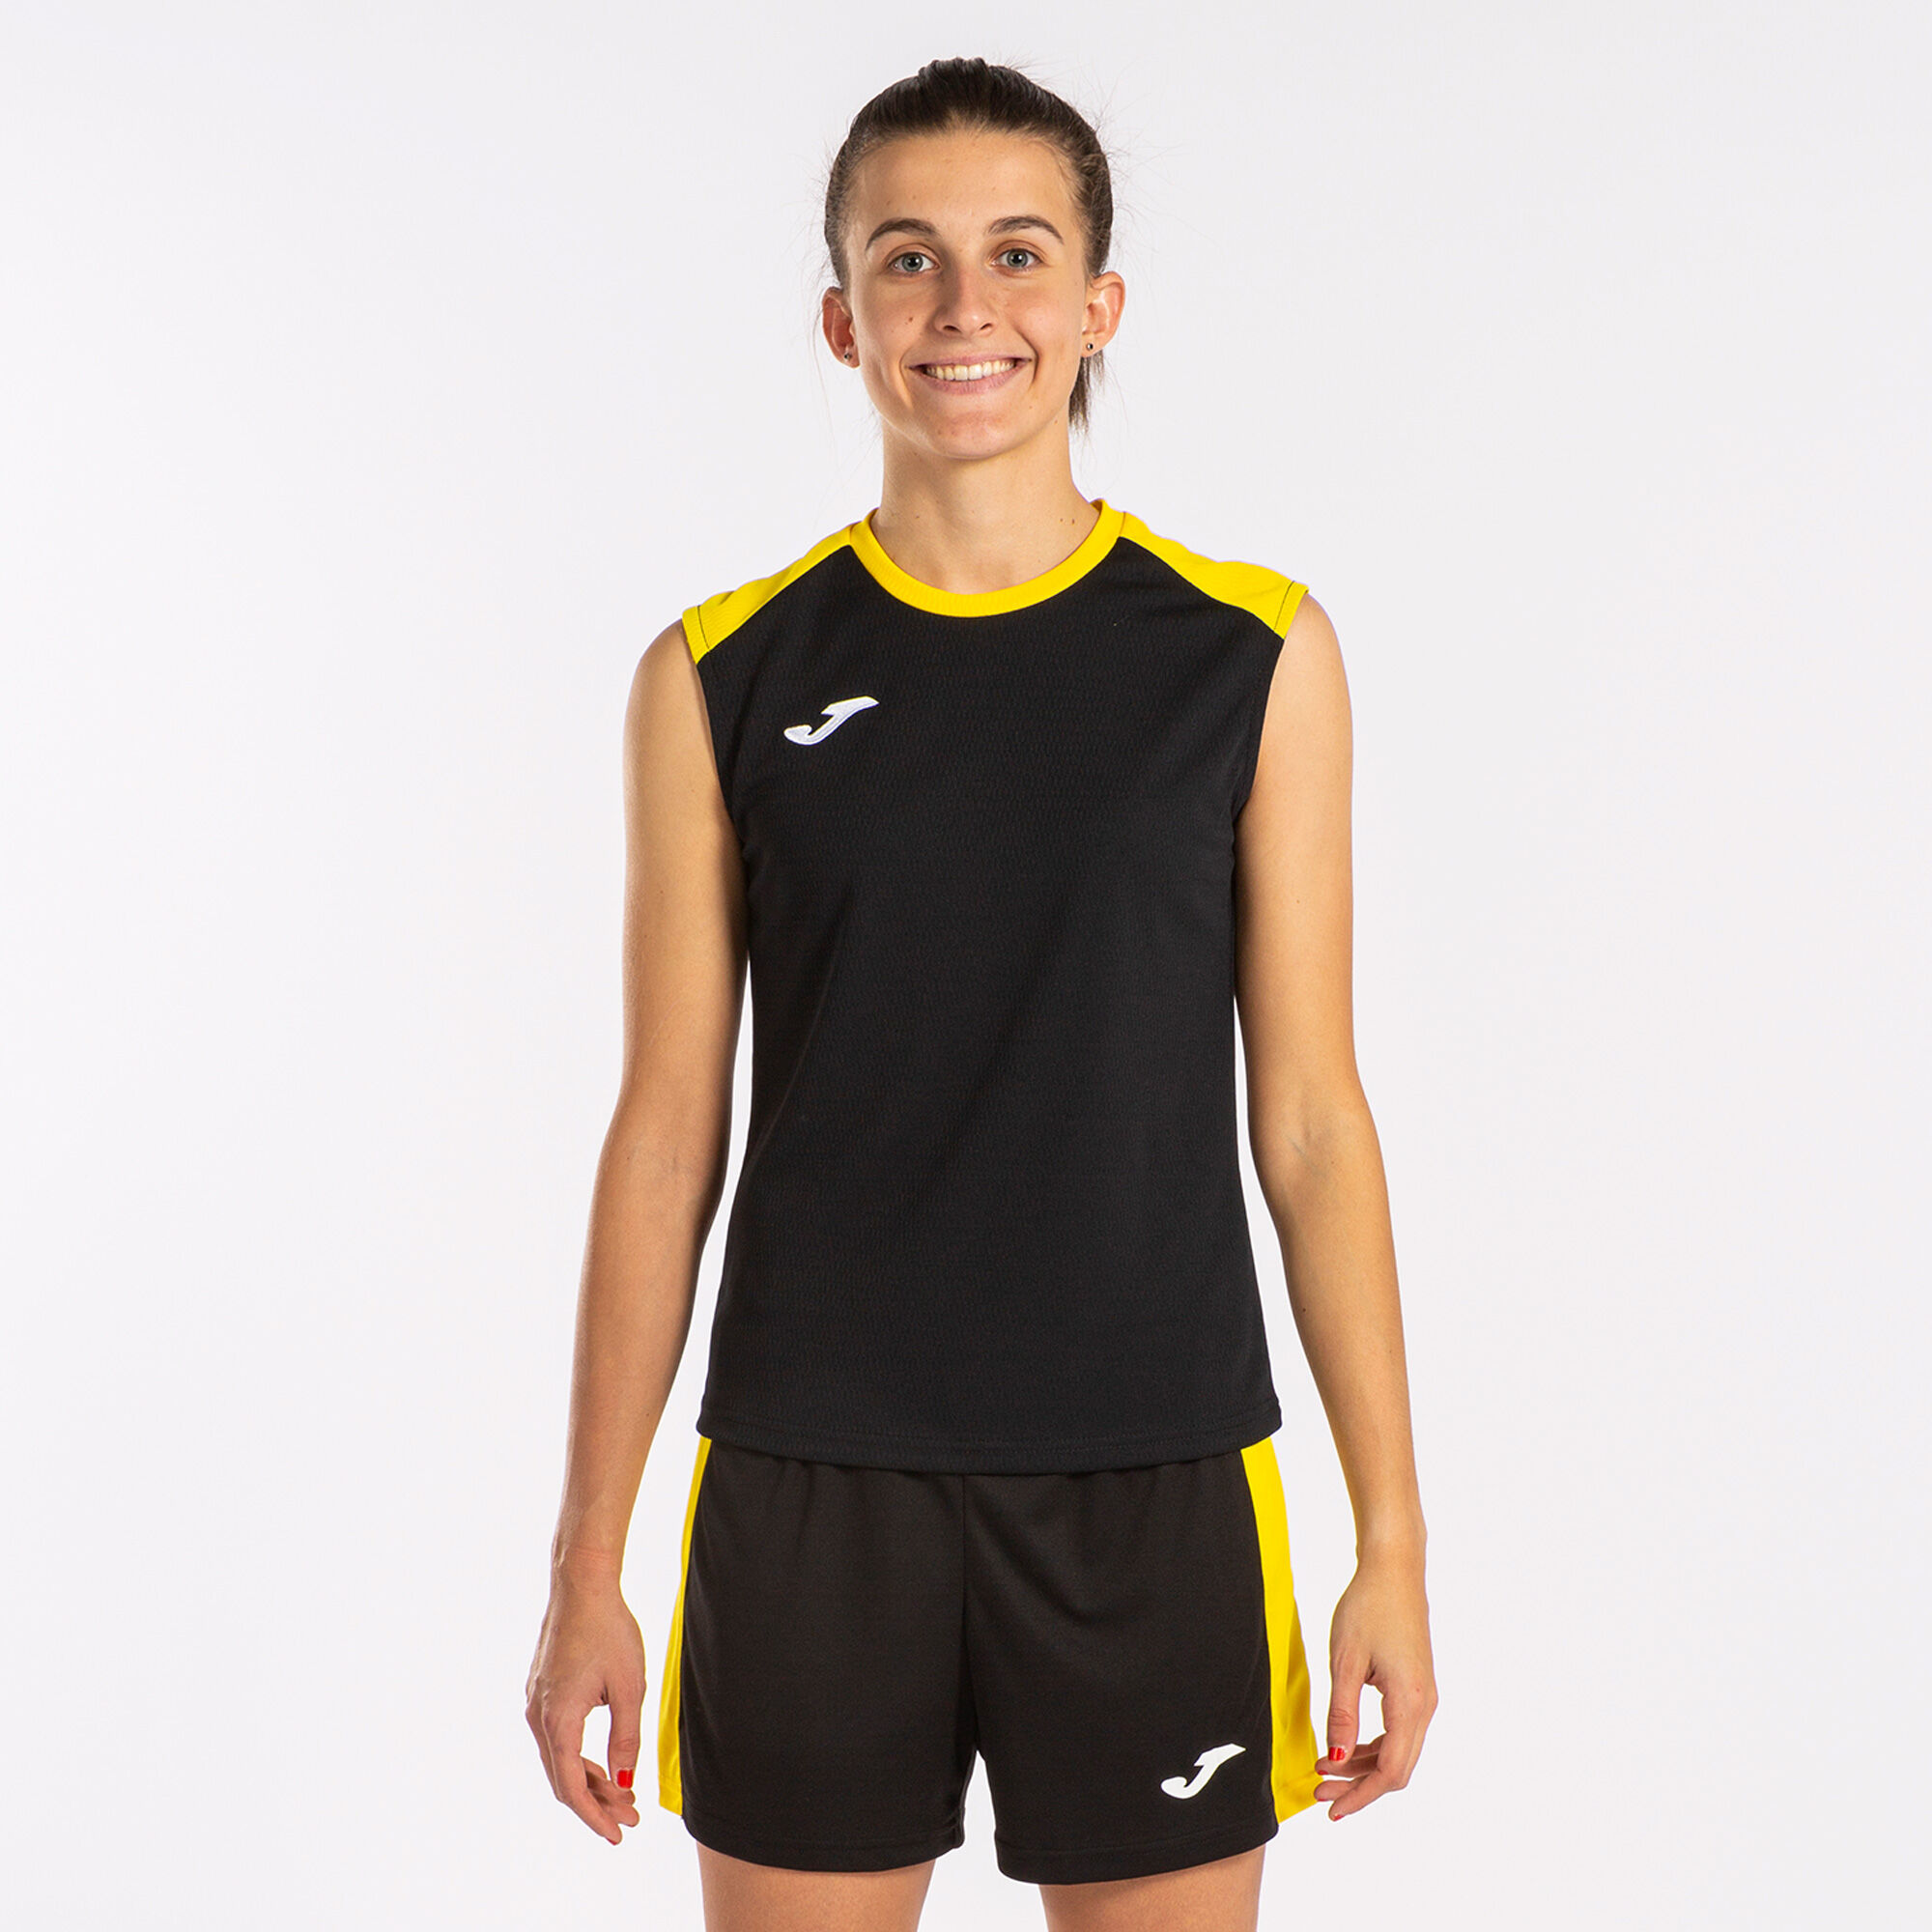 Joma Camiseta Mujer Race Amarillo-Negro S/M, Mujer